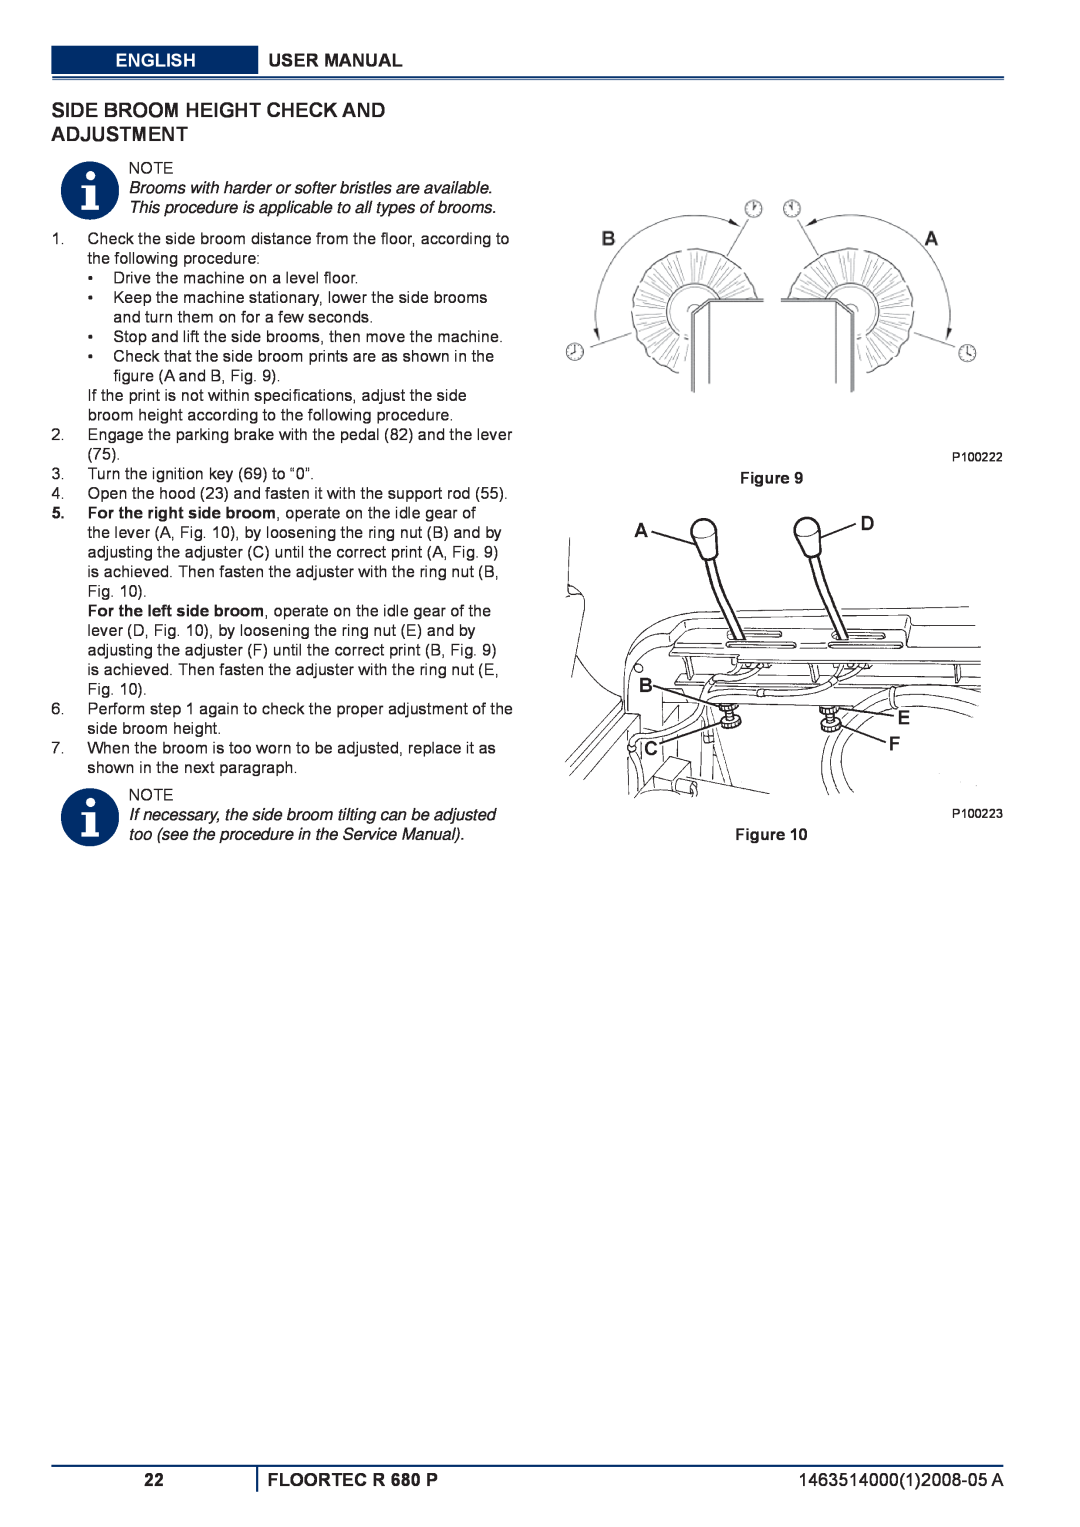 Nilfisk-ALTO manuel dutilisation Side Broom Height Check And Adjustment, English, User Manual, FLOORTEC R 680 P 